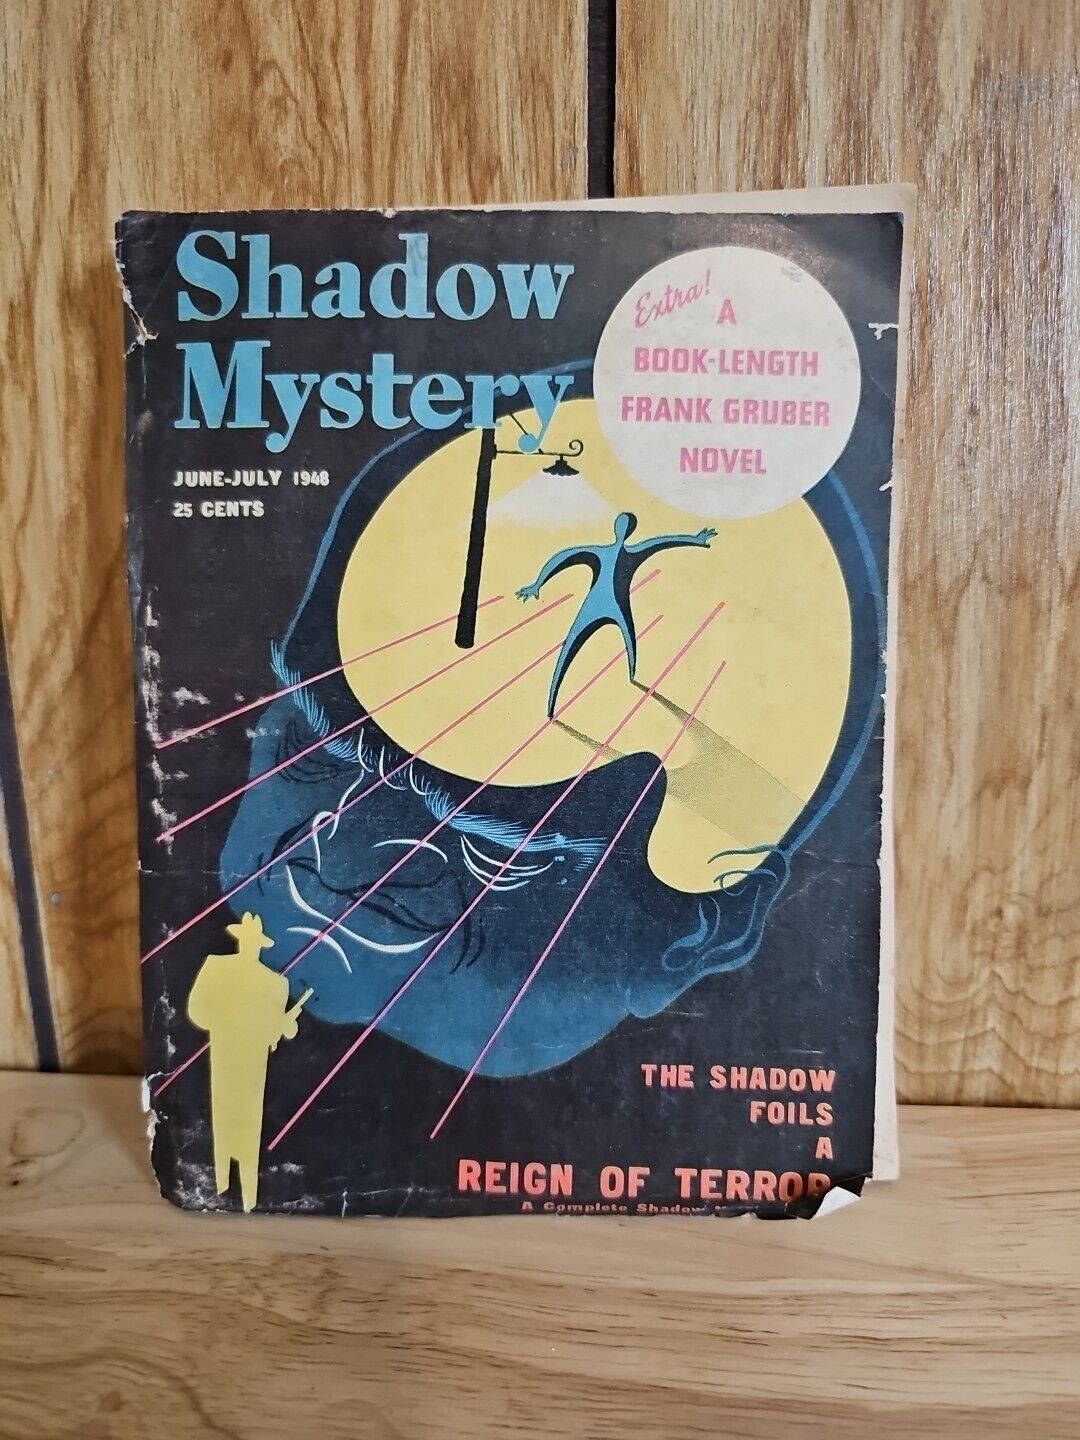 Shadow Mystery Novel Jun-Jul 1948 Frank Gruber Vintage Illustrated Novel Pulp